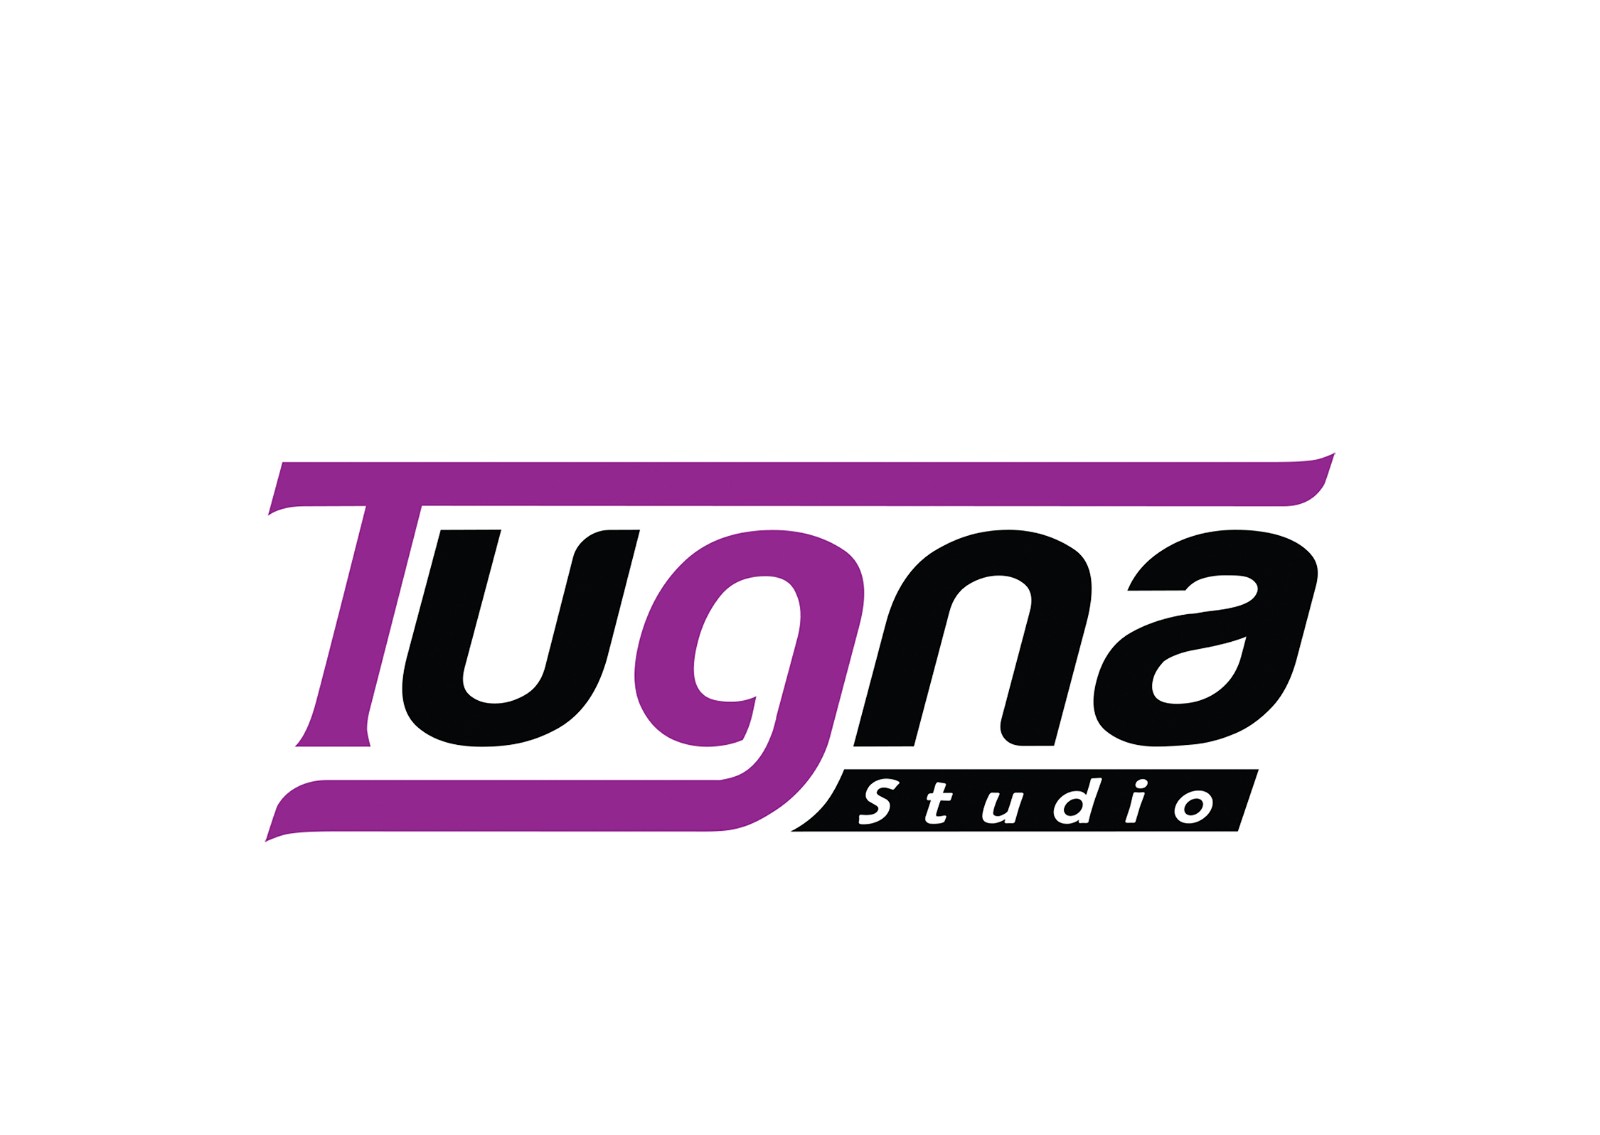 Tugna Studio